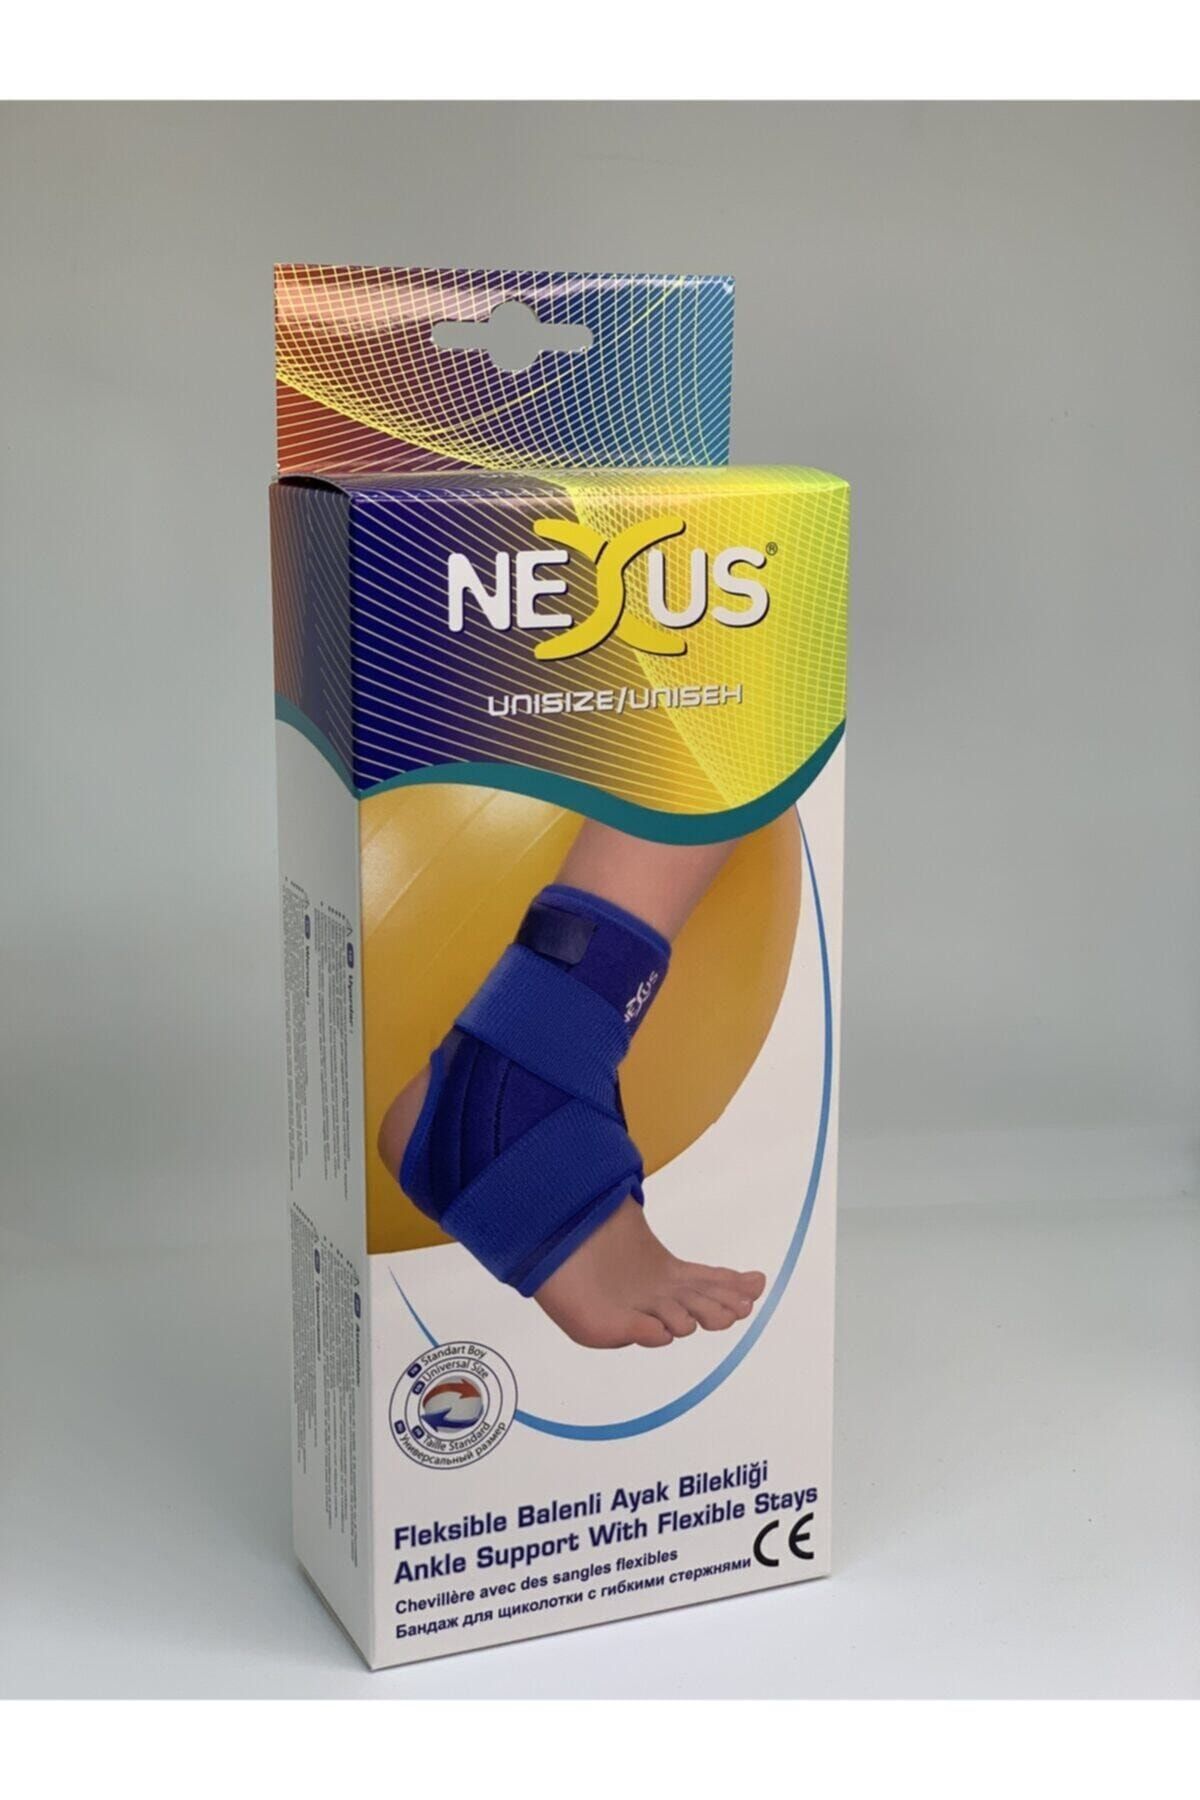 Variteks Nexus Fleksible Balenli Ayak Bilekliği Standart Boy 897